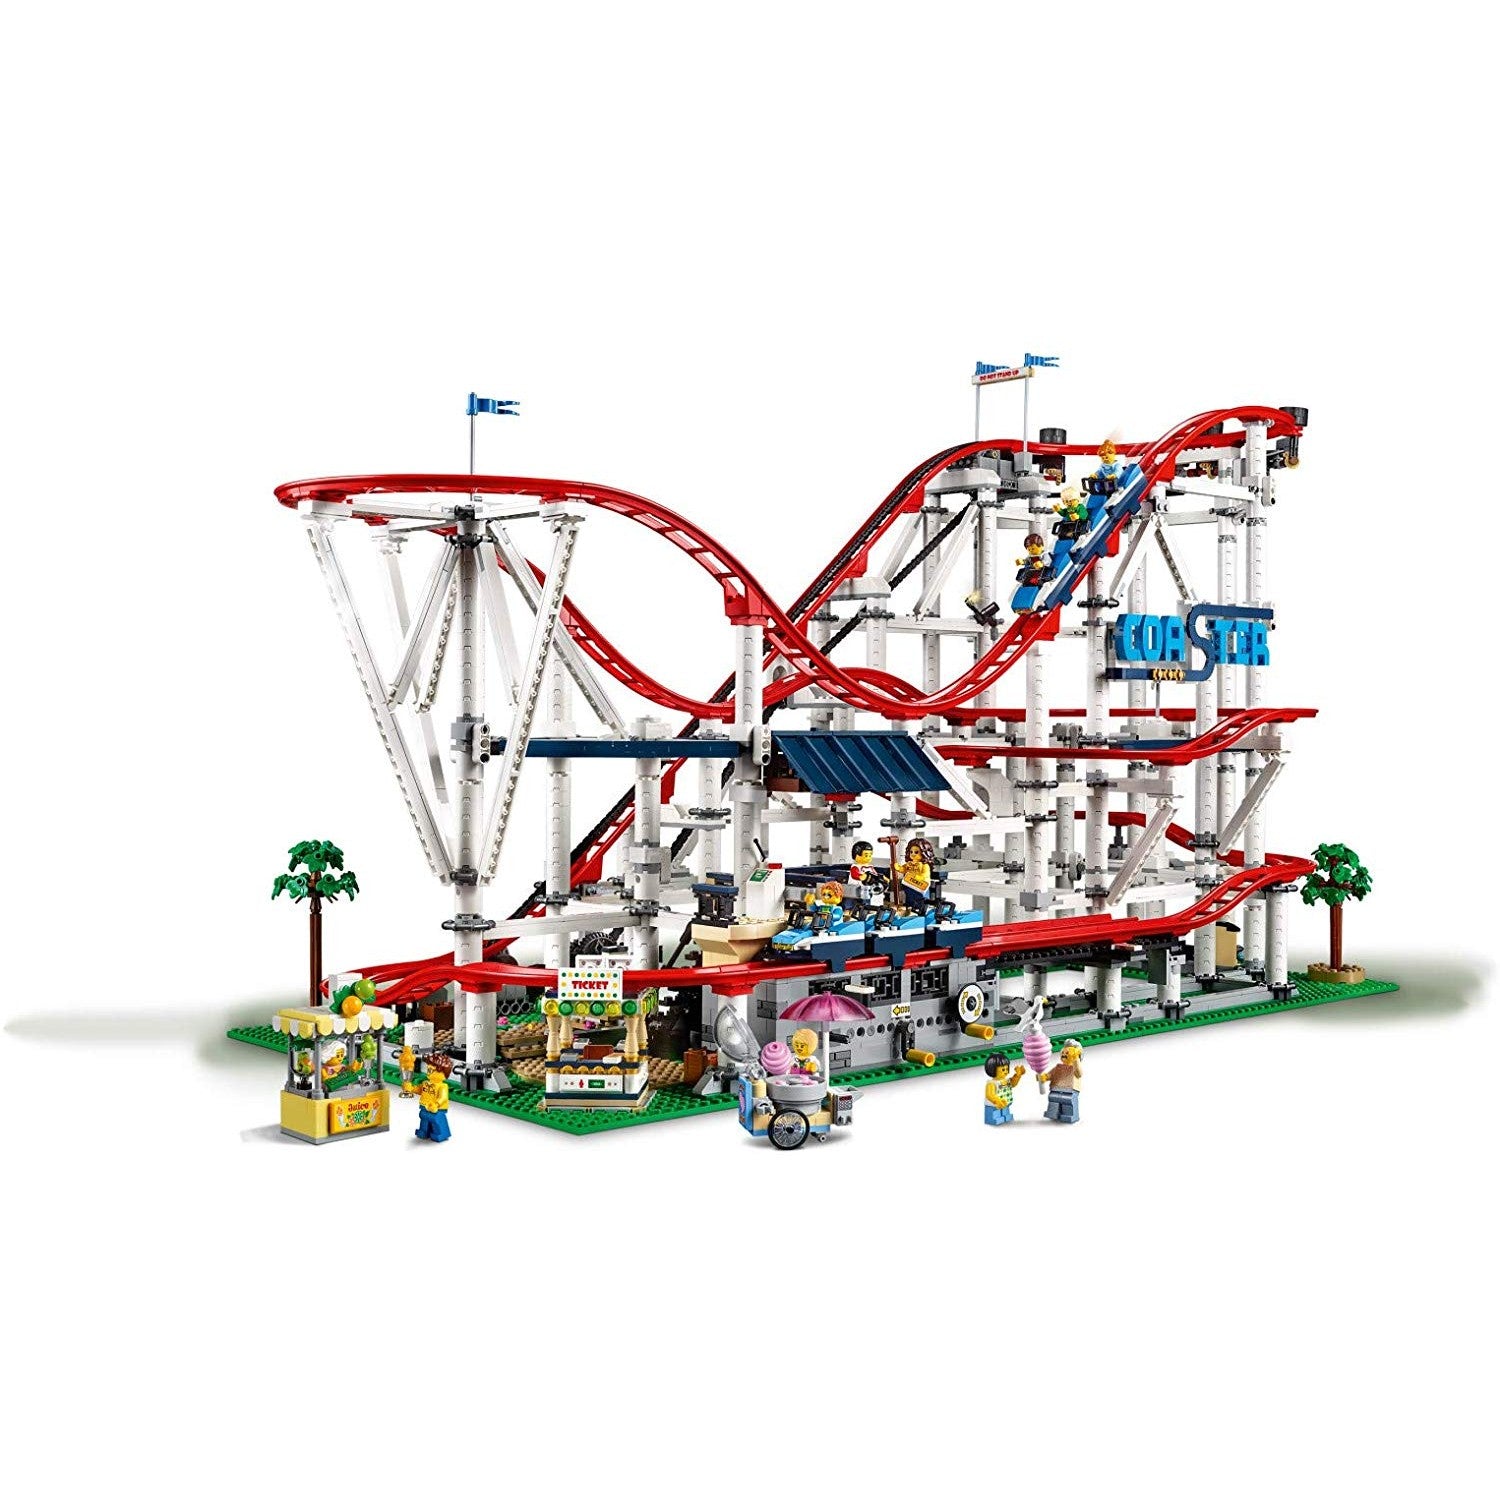 Lego Roller Coaster - oddgifts.com